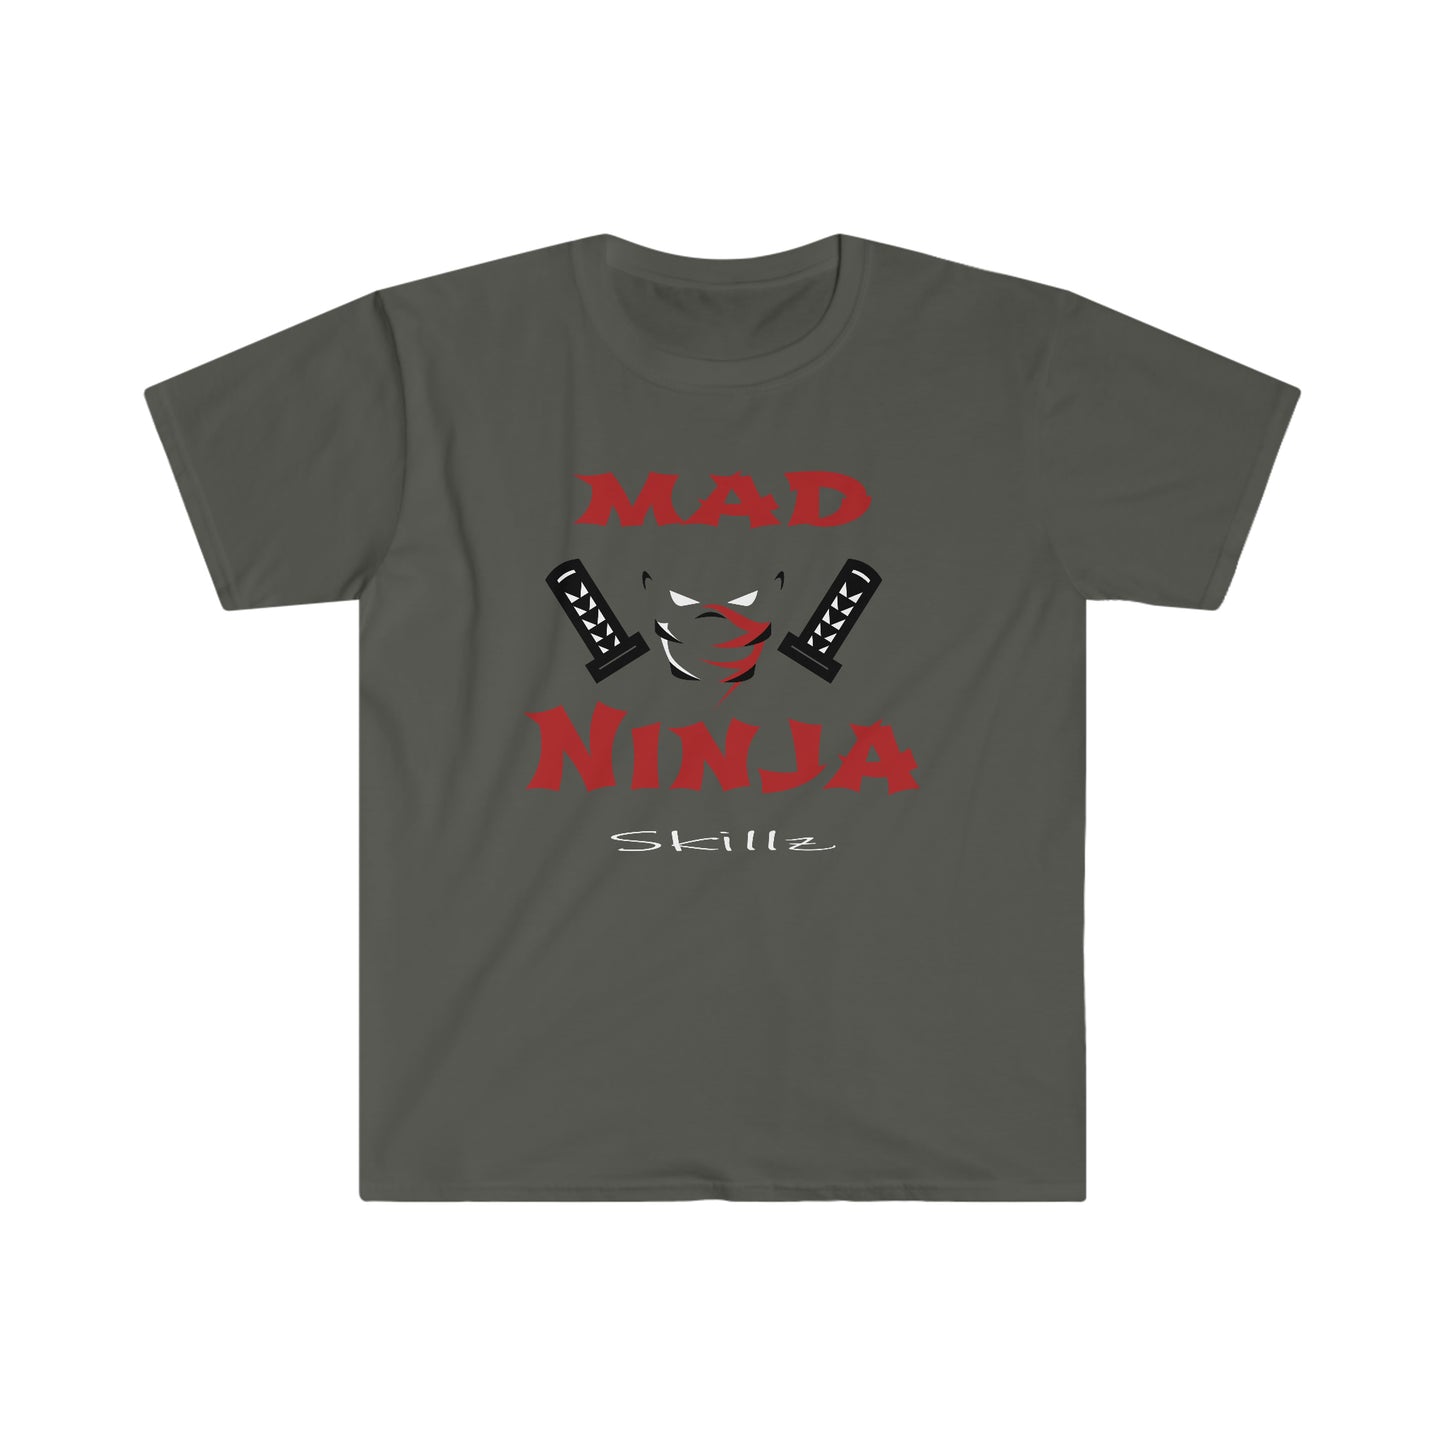 Ninja "Mad Ninja Skillz" Softstyle T-Shirt